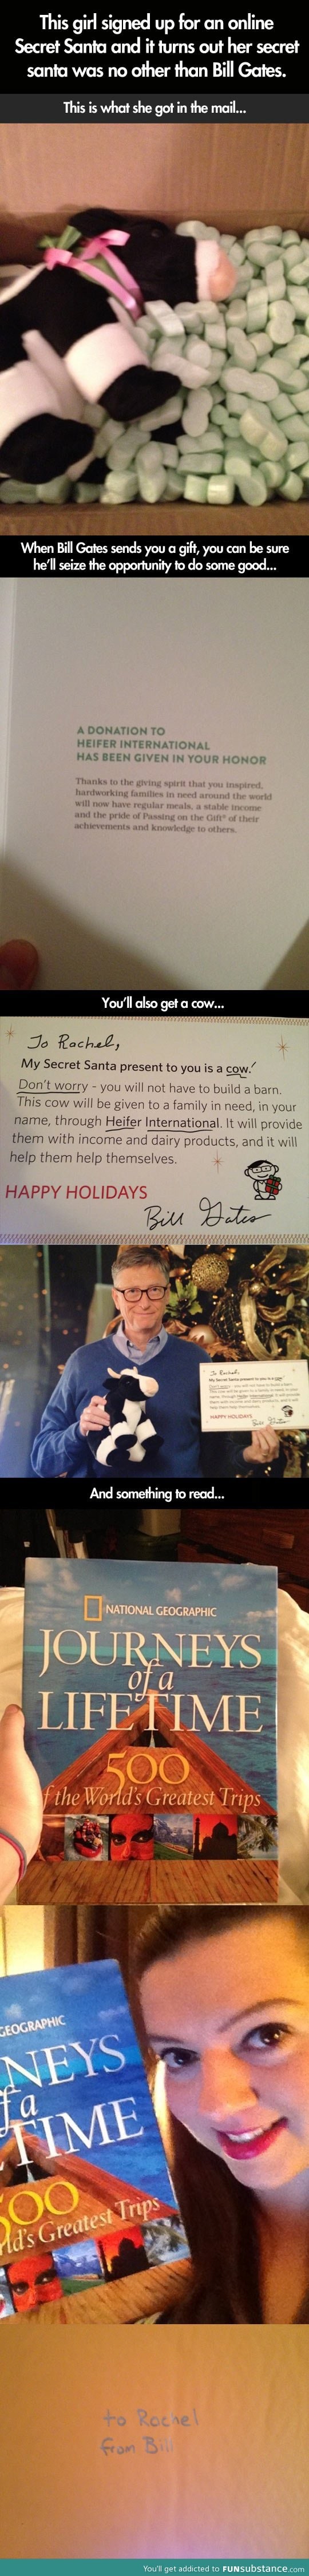 What Bill Gates Gave a Random Stranger in an online Secret Santa